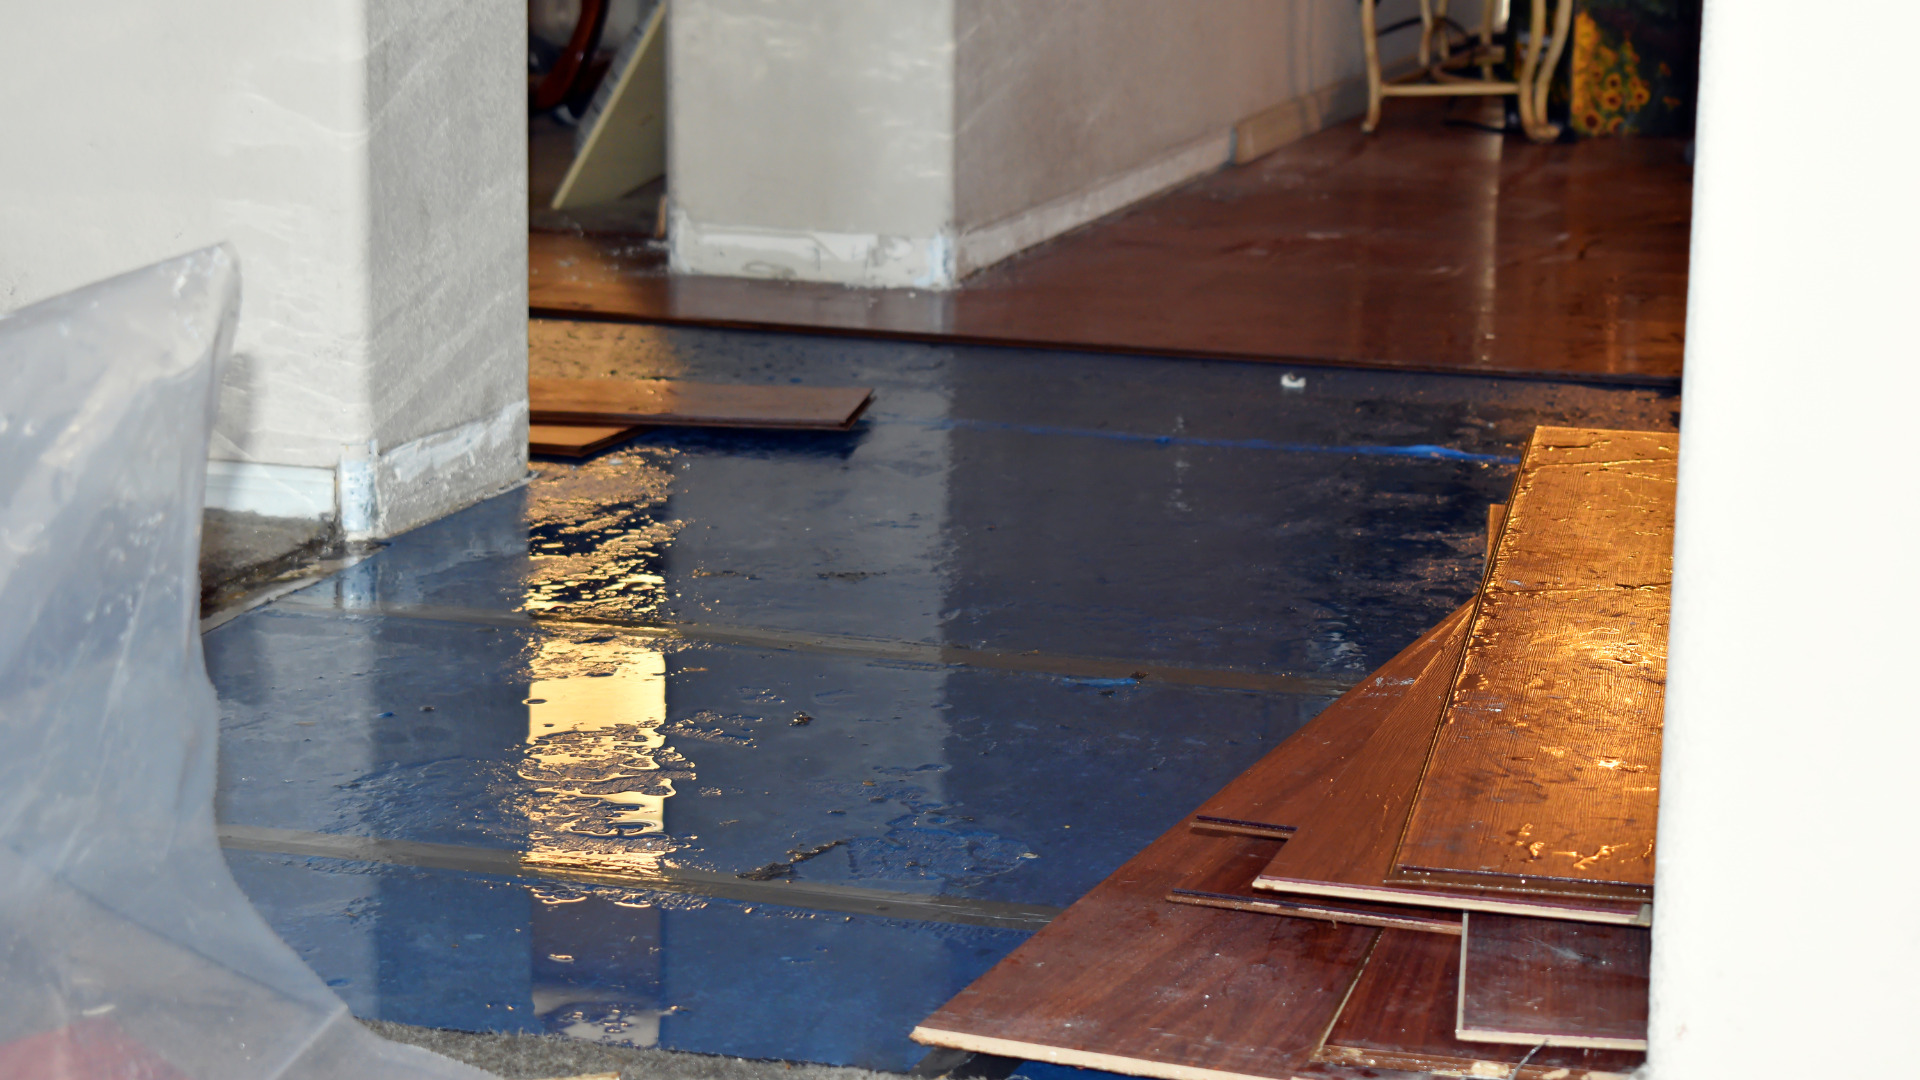 A water-damaged floor